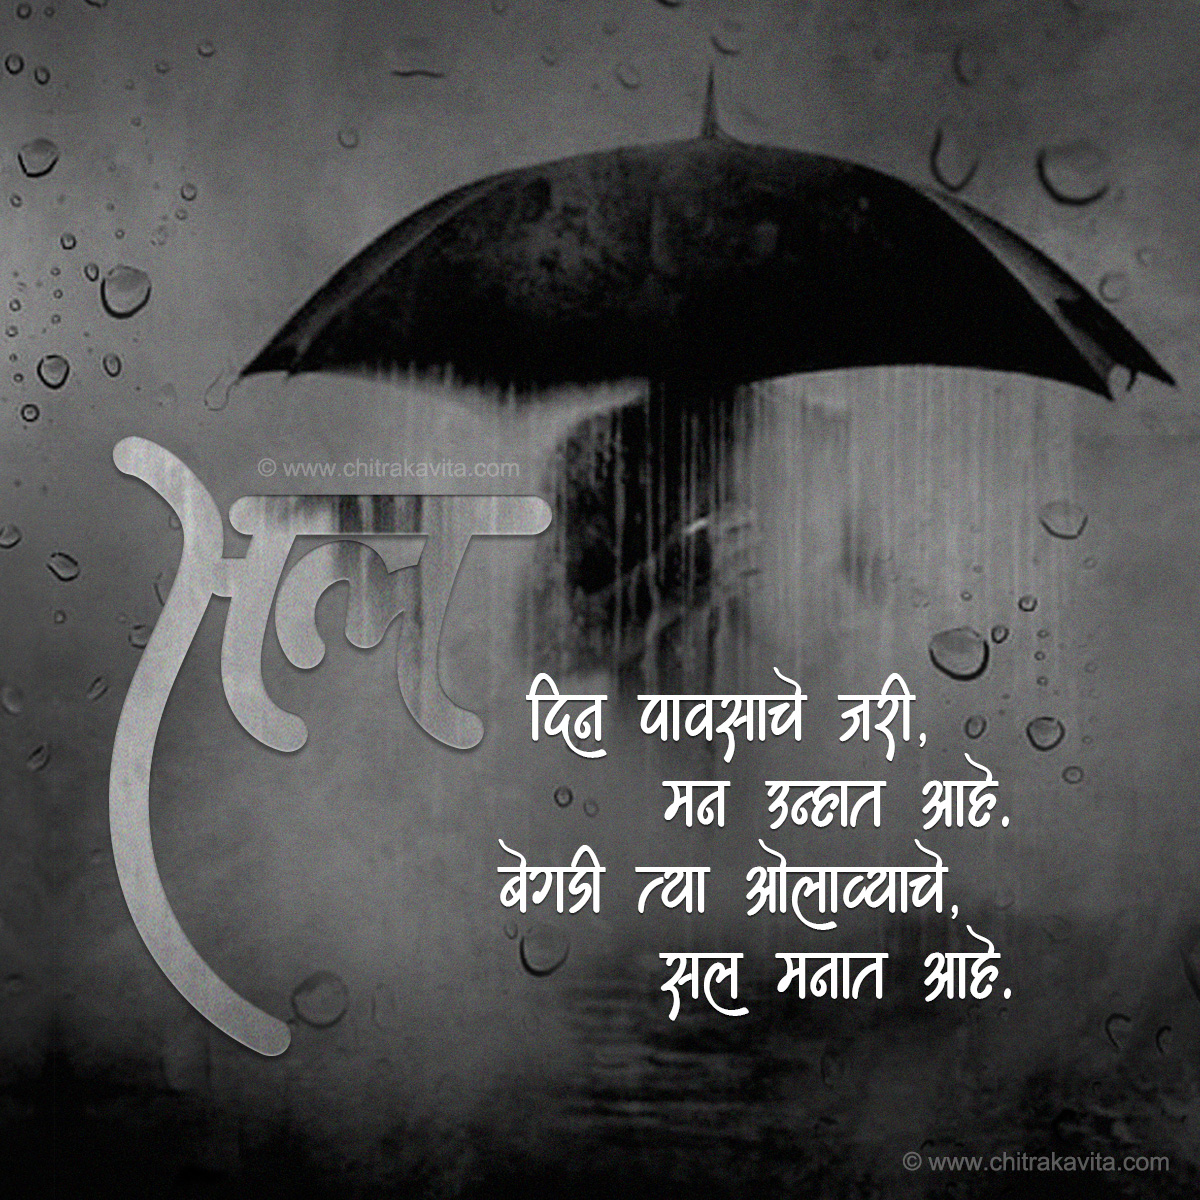 Marathi Rain Greeting Sal | Chitrakavita.com